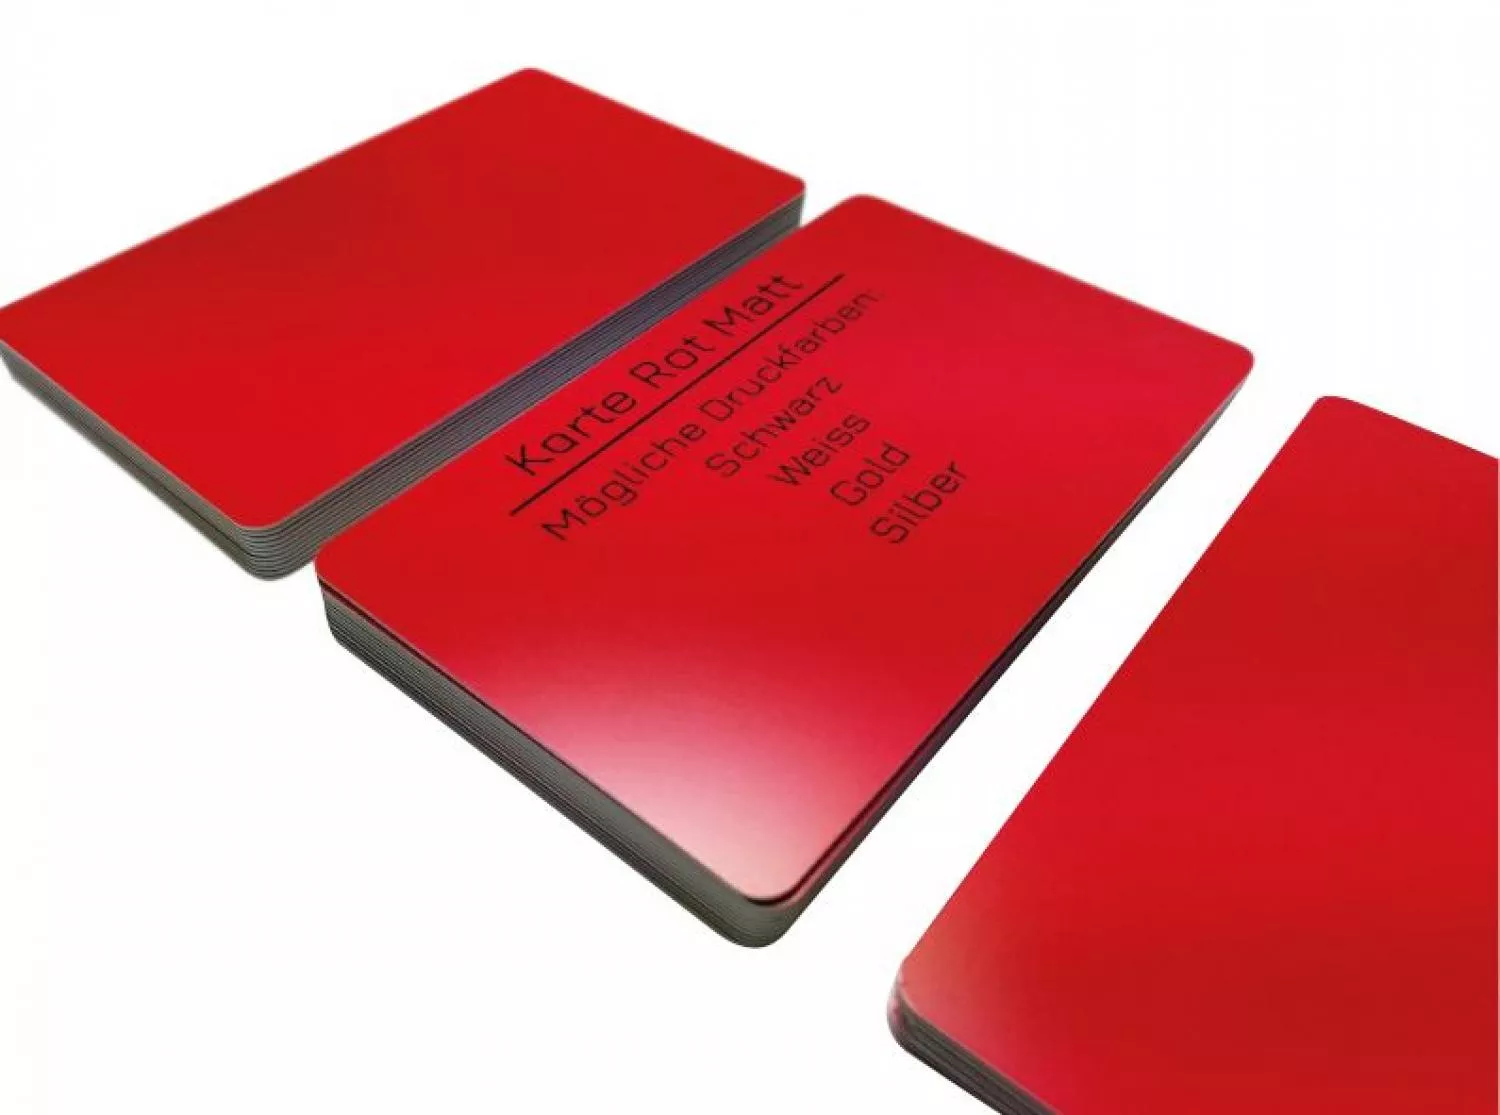 plastic card red matt finish thin